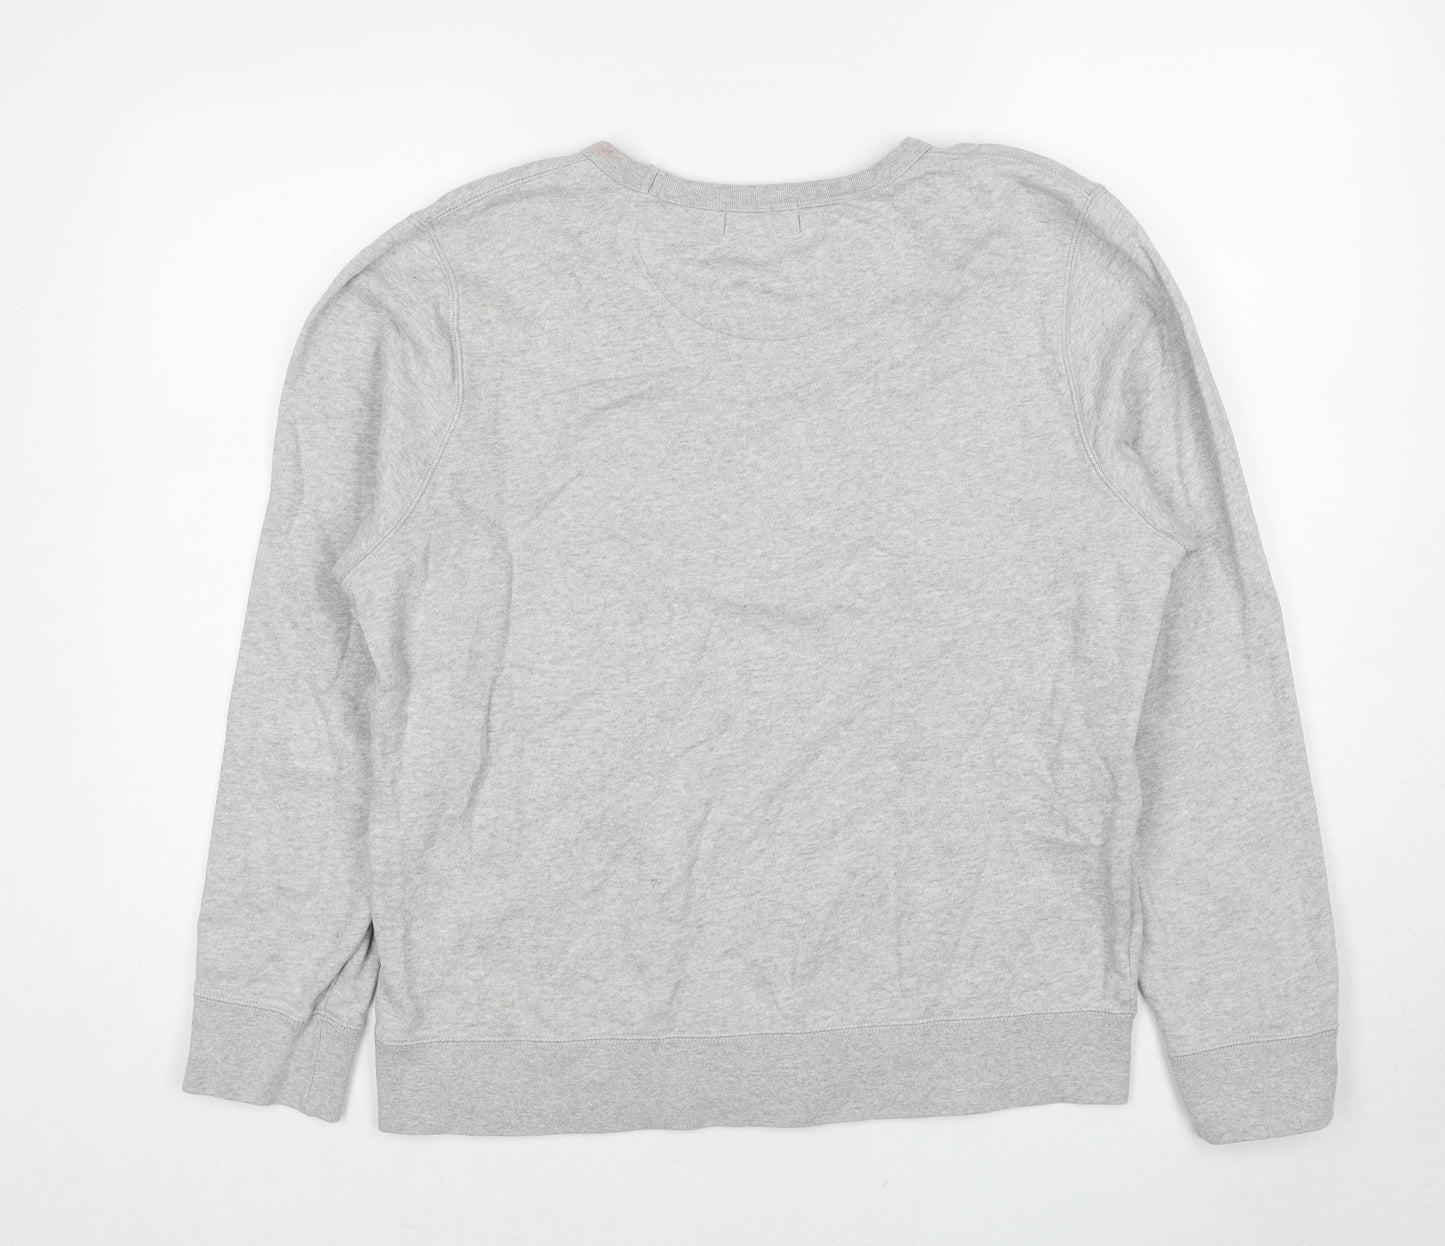 Maison Labiche Mens Grey Cotton Pullover Sweatshirt Size M - Playboy Unisex